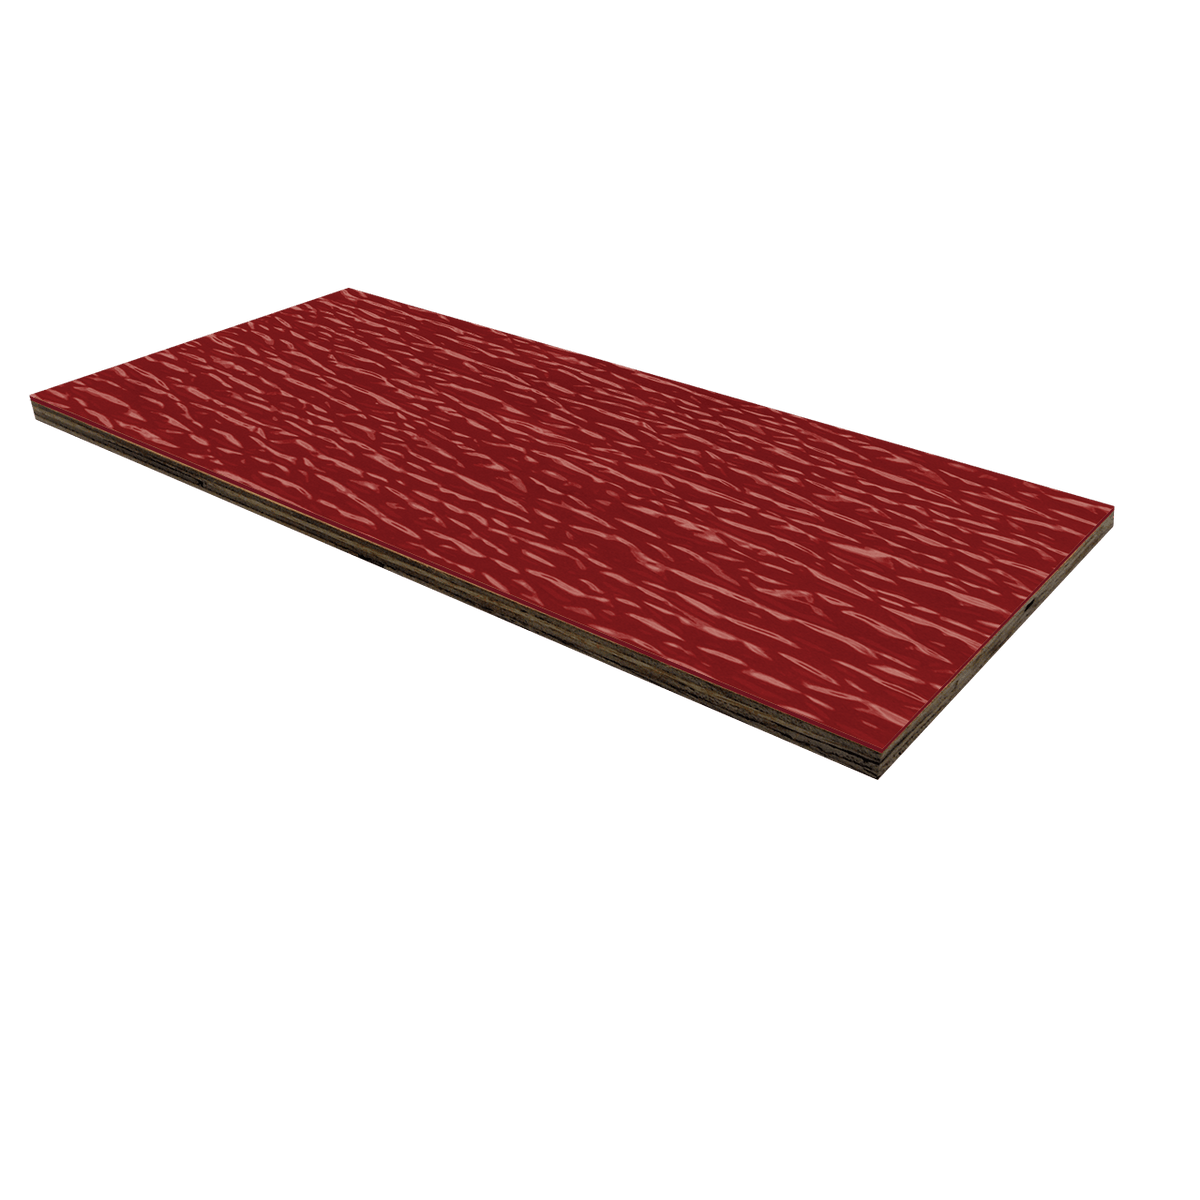 1/4" Textured Fiberglass (FRP) Laminate - Red